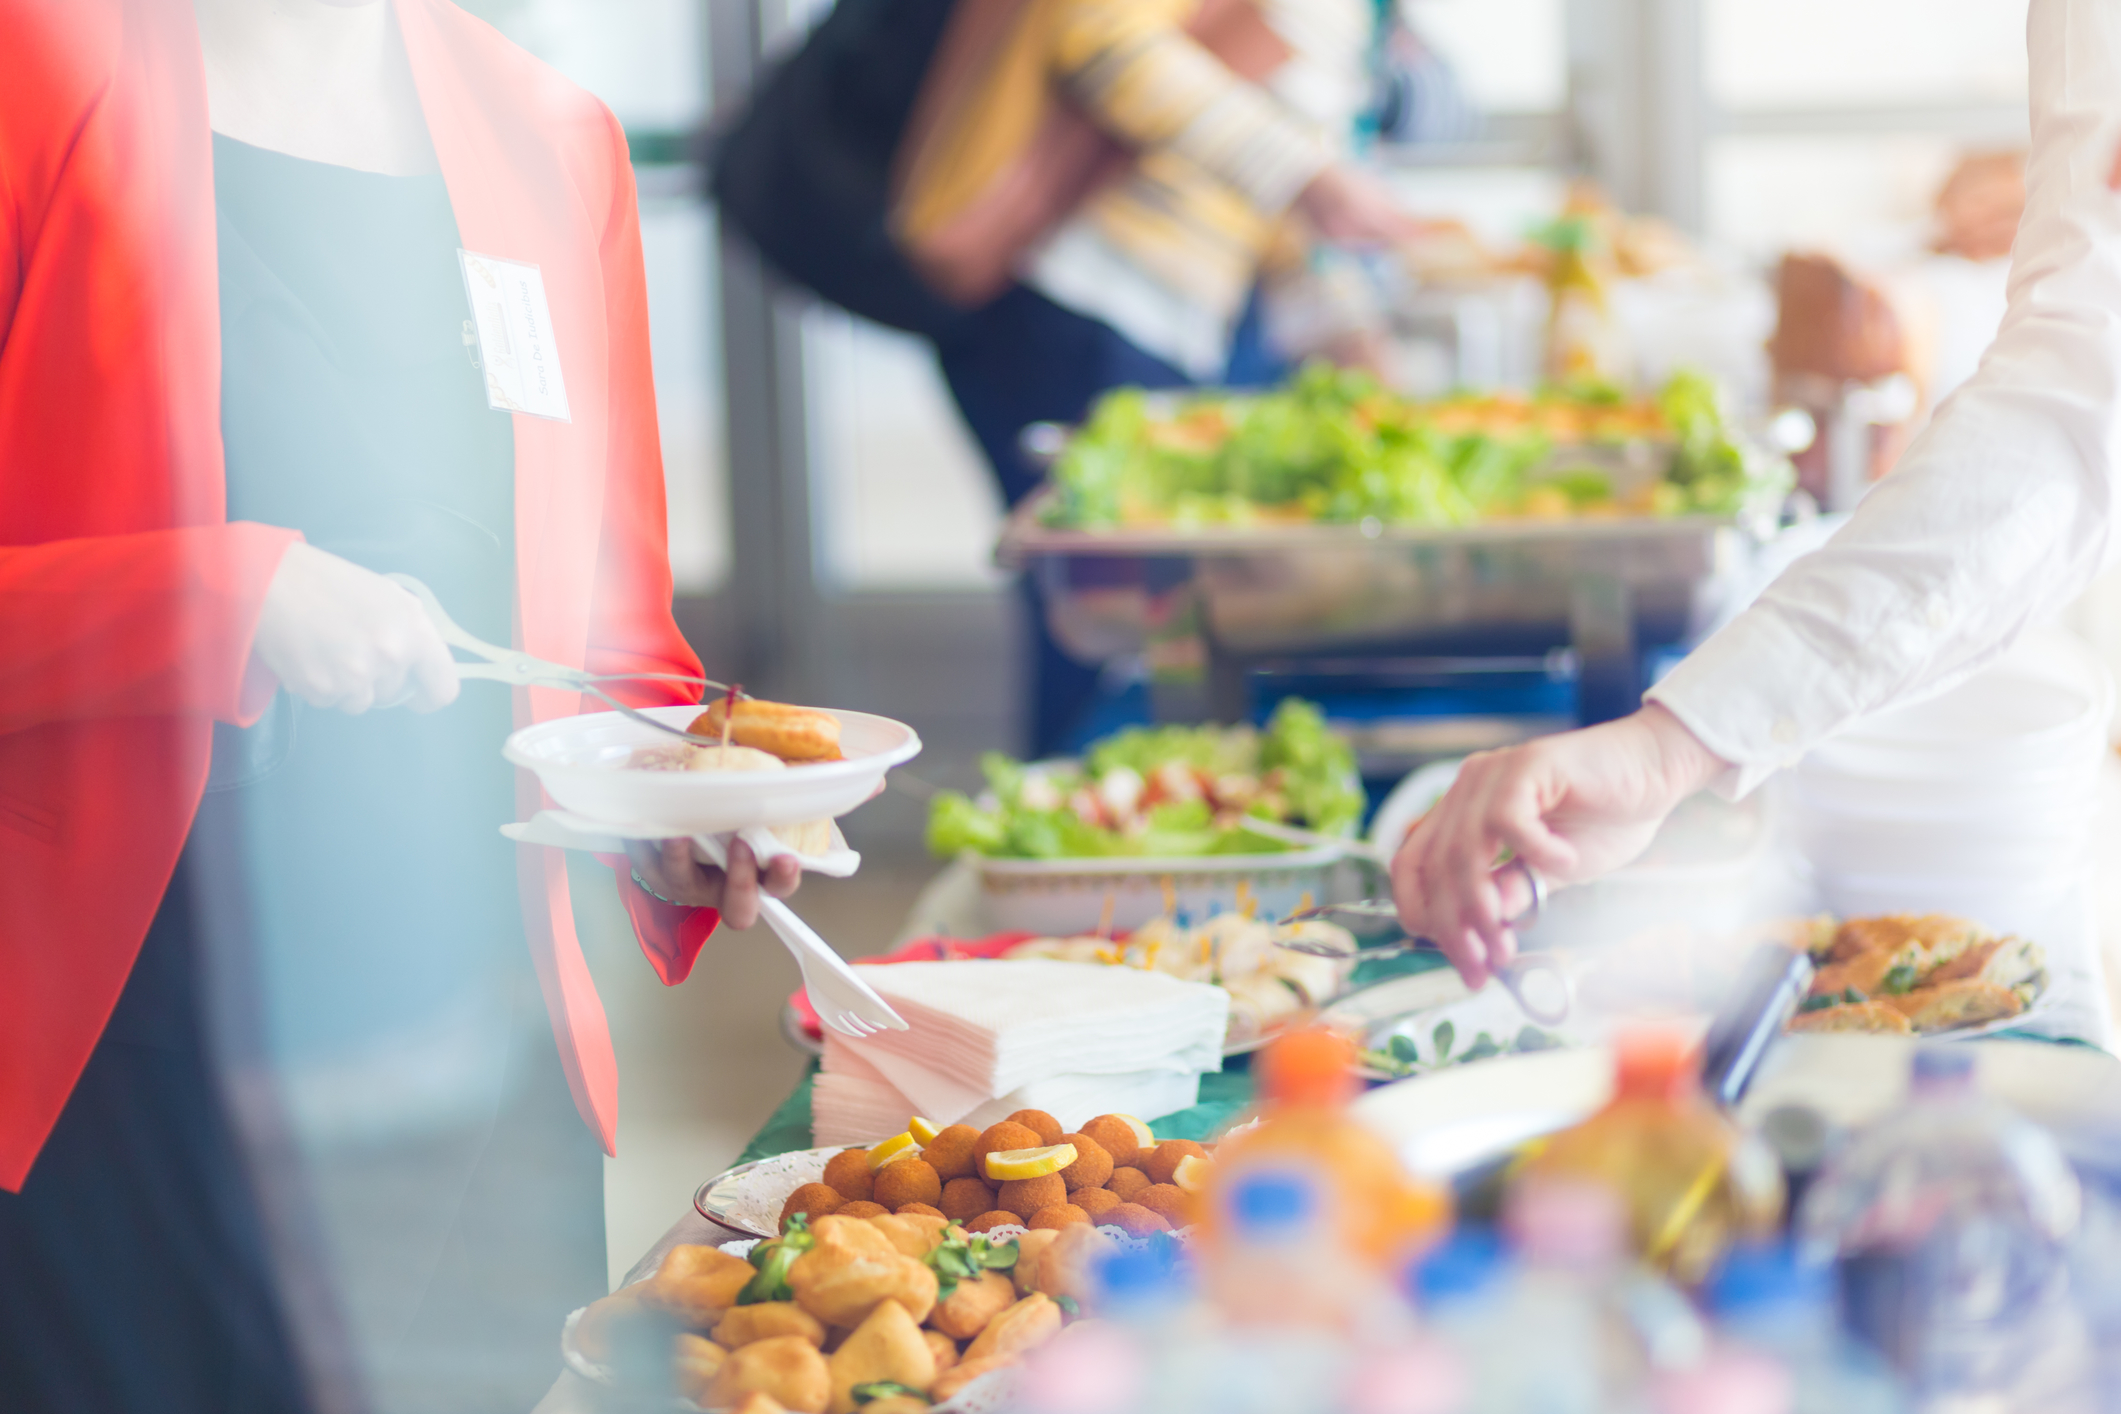 5 ways to handle food at business meetings